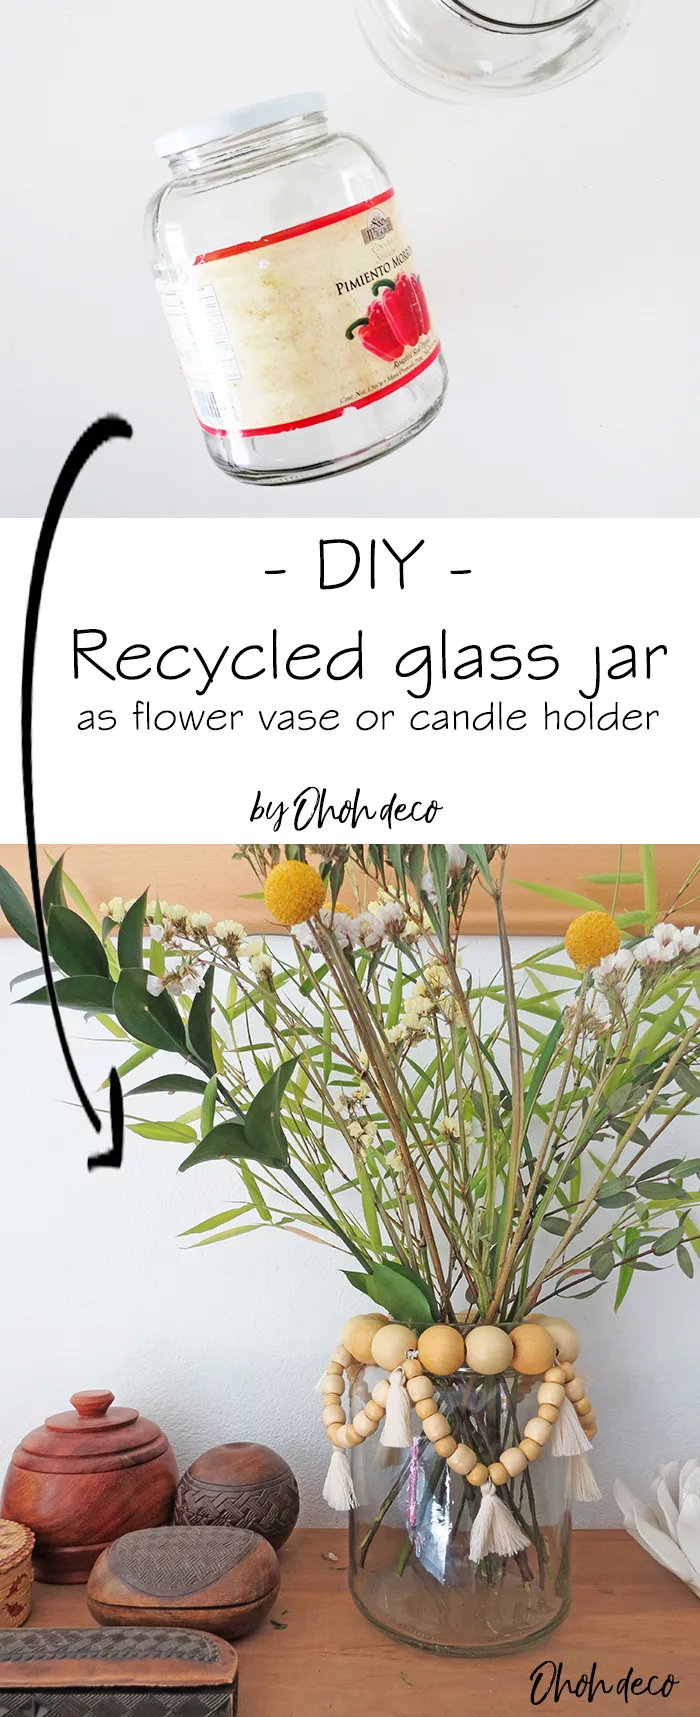 Recycled glass jar as flower vase